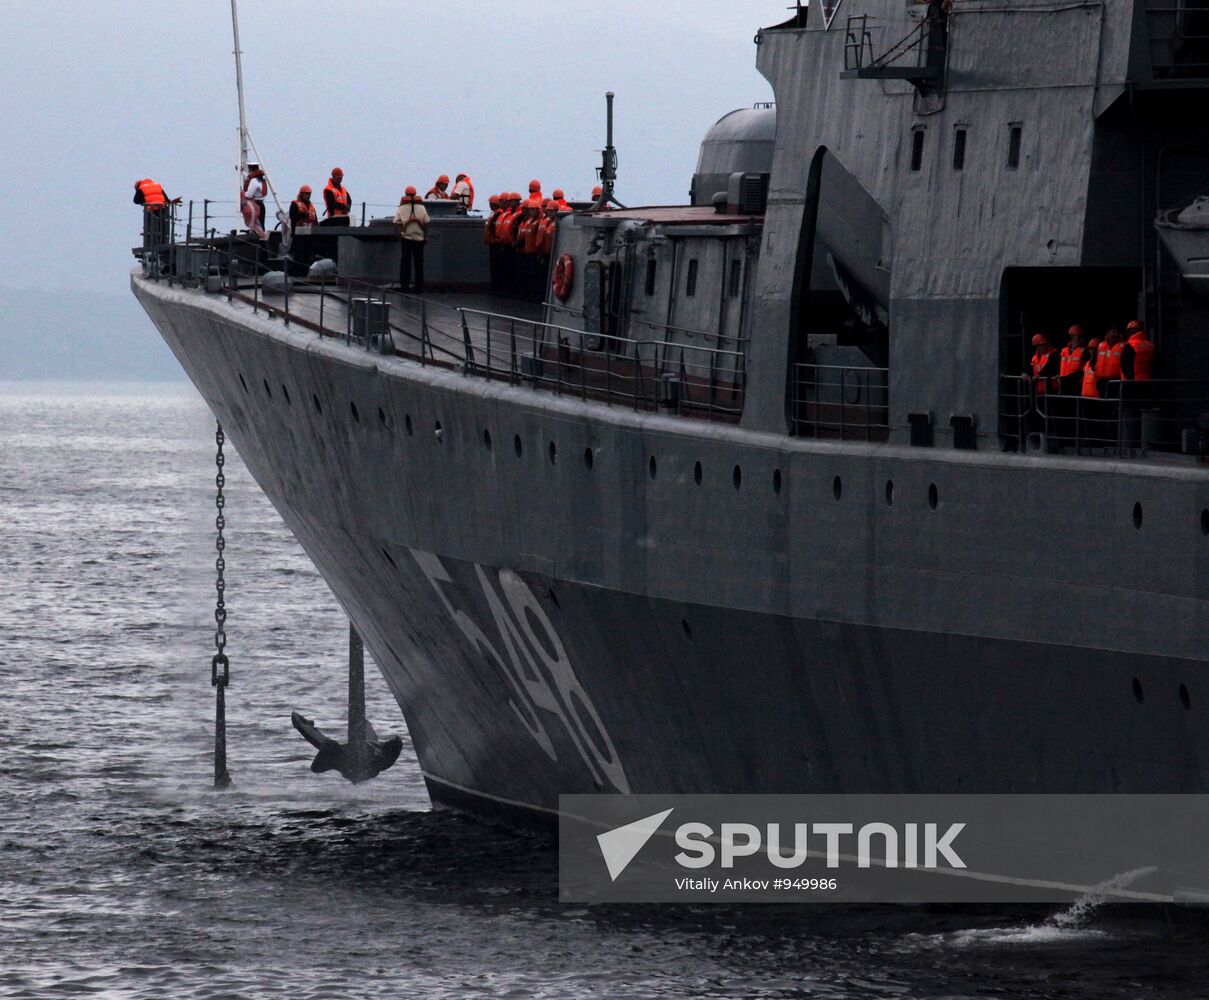 Unit of warships leave Vladivostok for Gulf of Aden